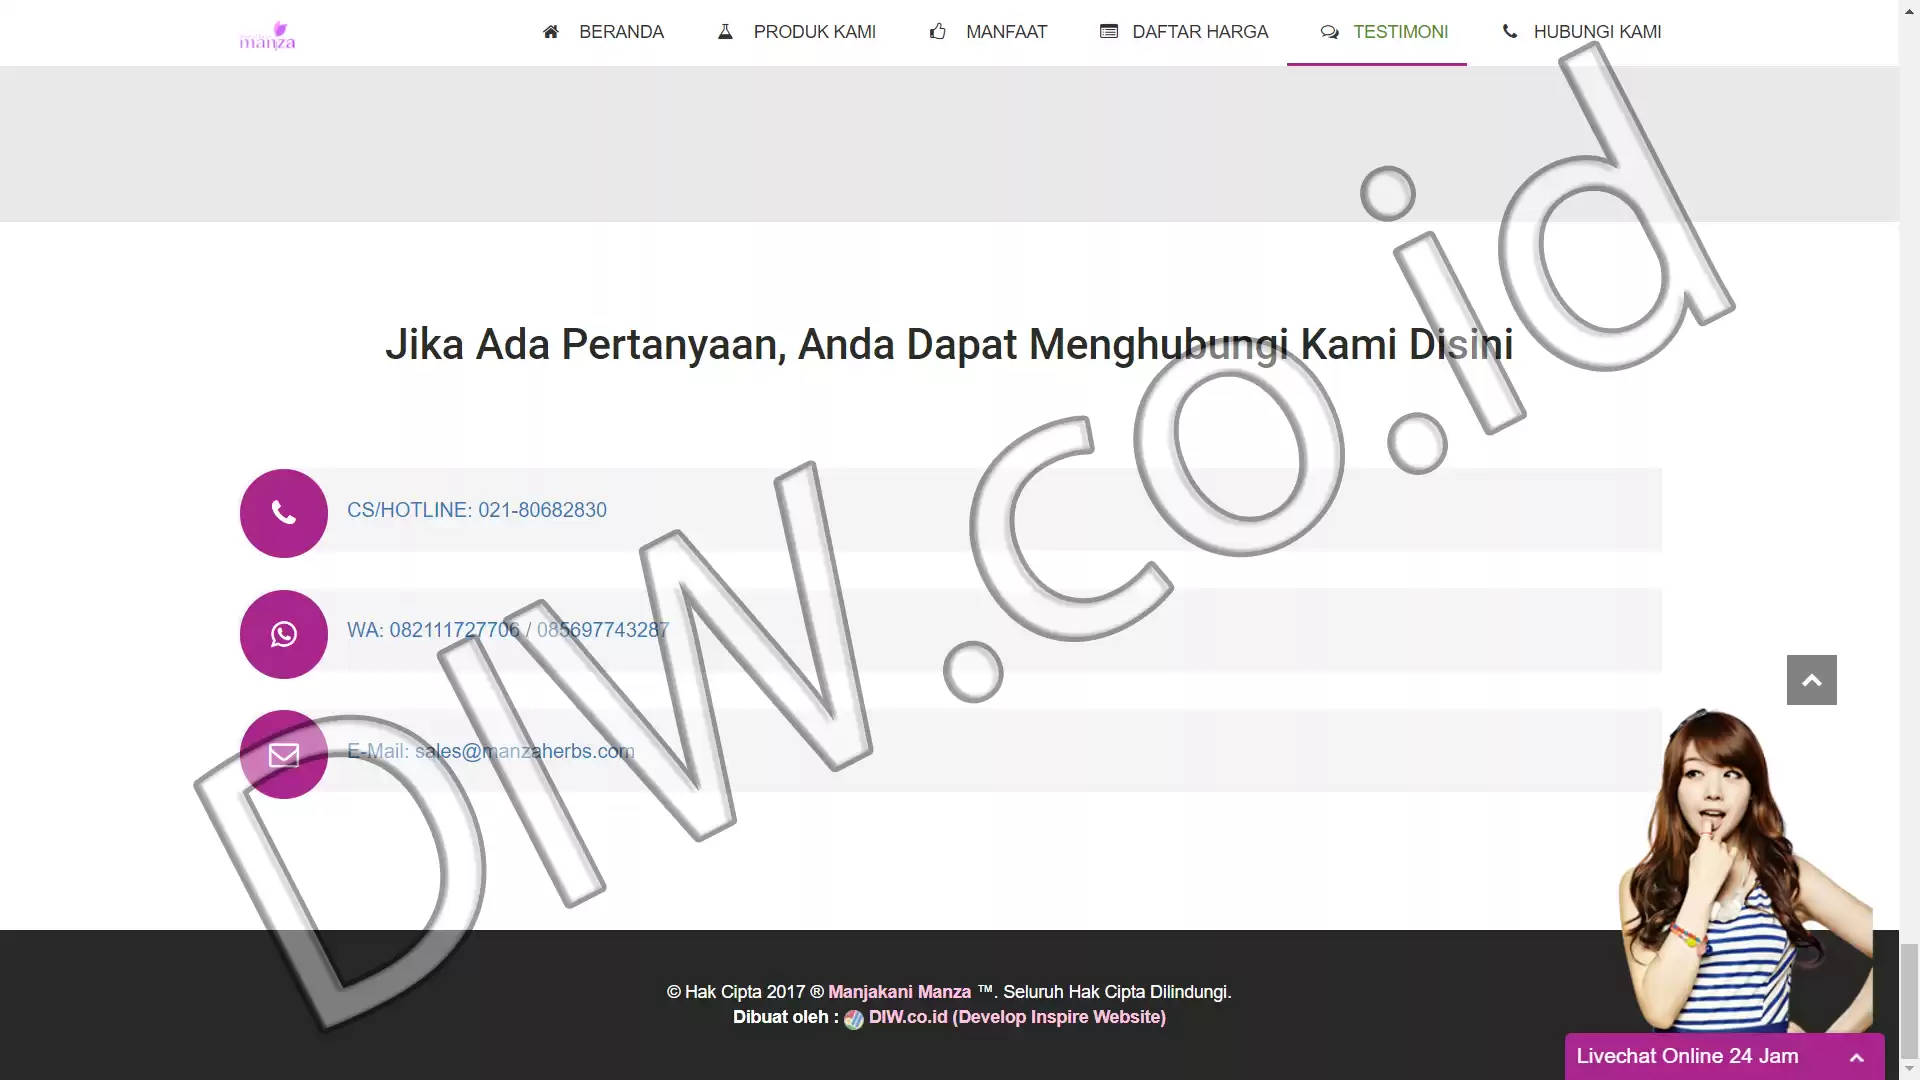 Portfolio - Manjakani Manza - DIW.co.id (Digital In Website) Jasa Pembuatan Website dan Program Skripsi